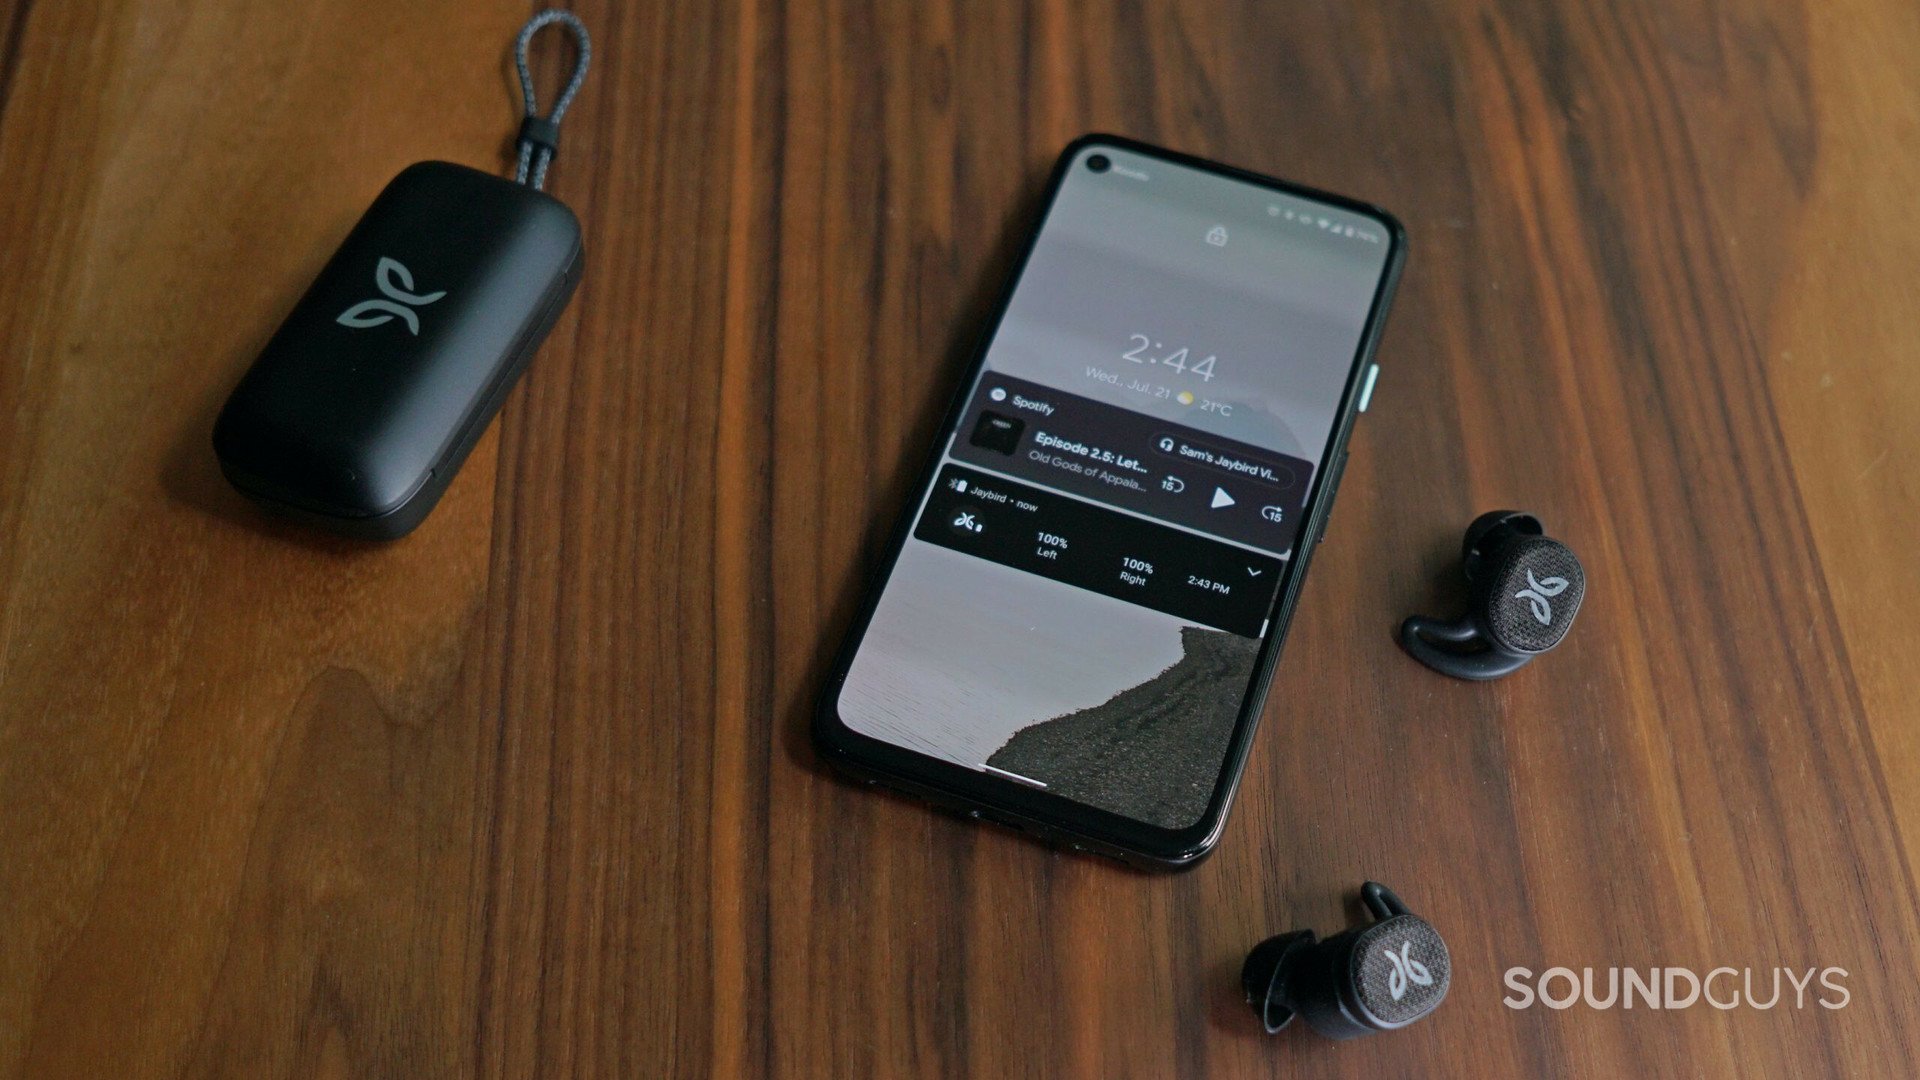 Jaybird Vista 2 earbuds and case next to smartphone.